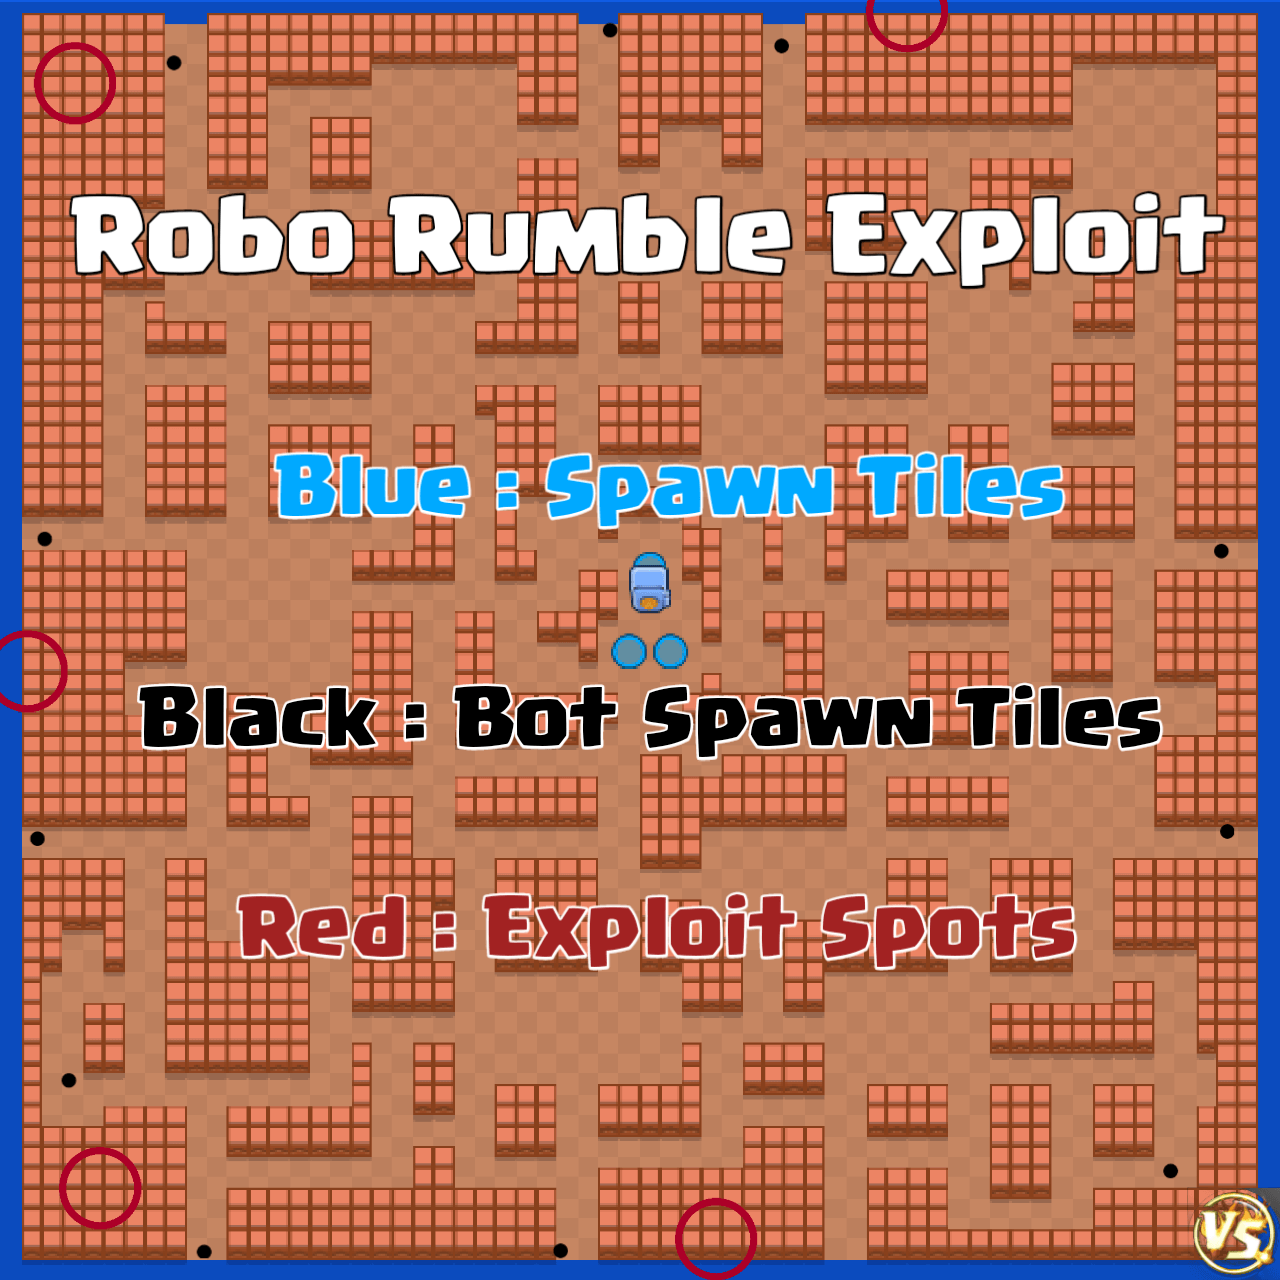 Robo-Rumble-Exploit